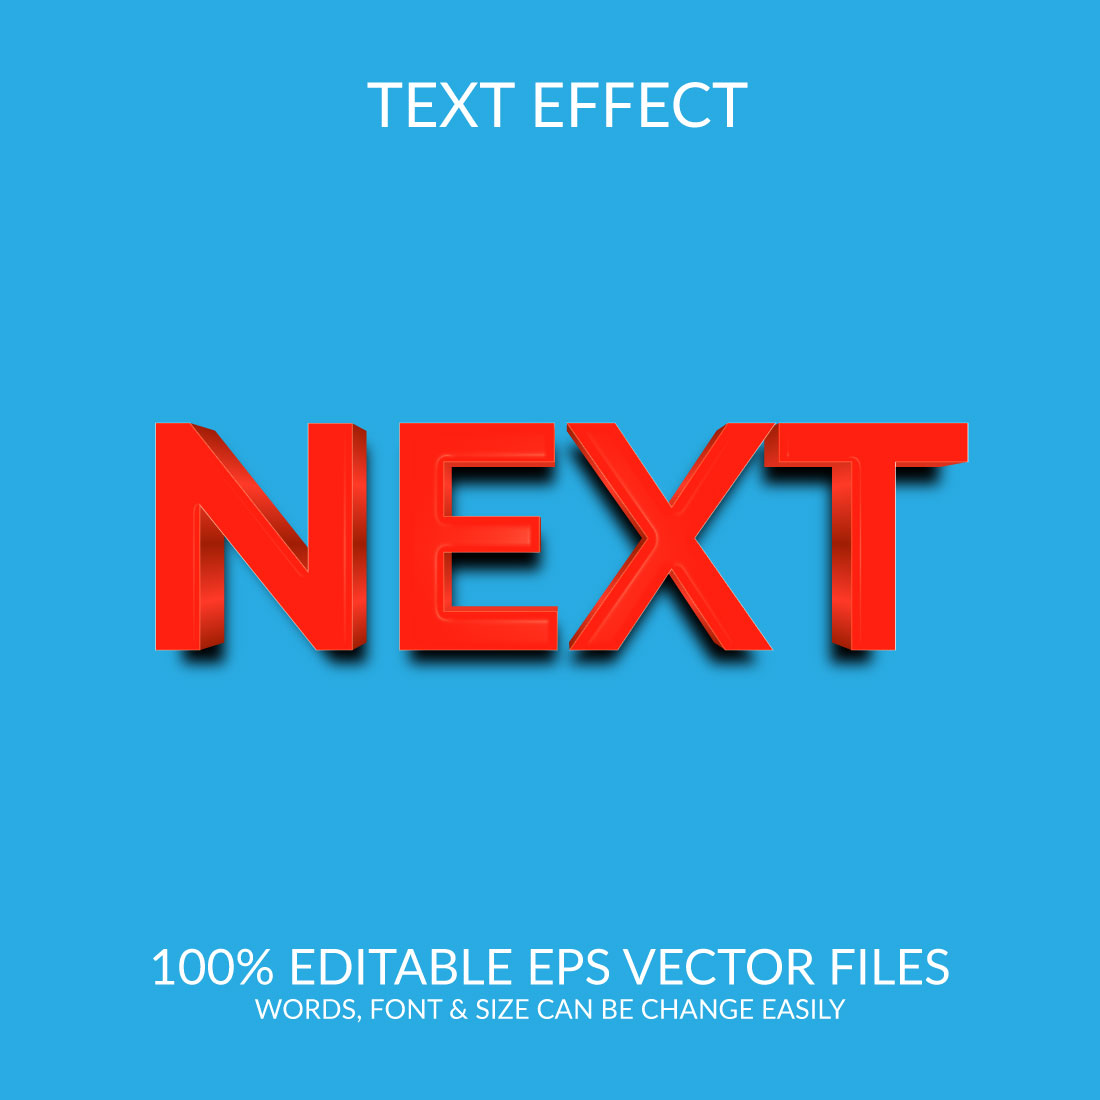 Next 3d vector text effect template design preview image.